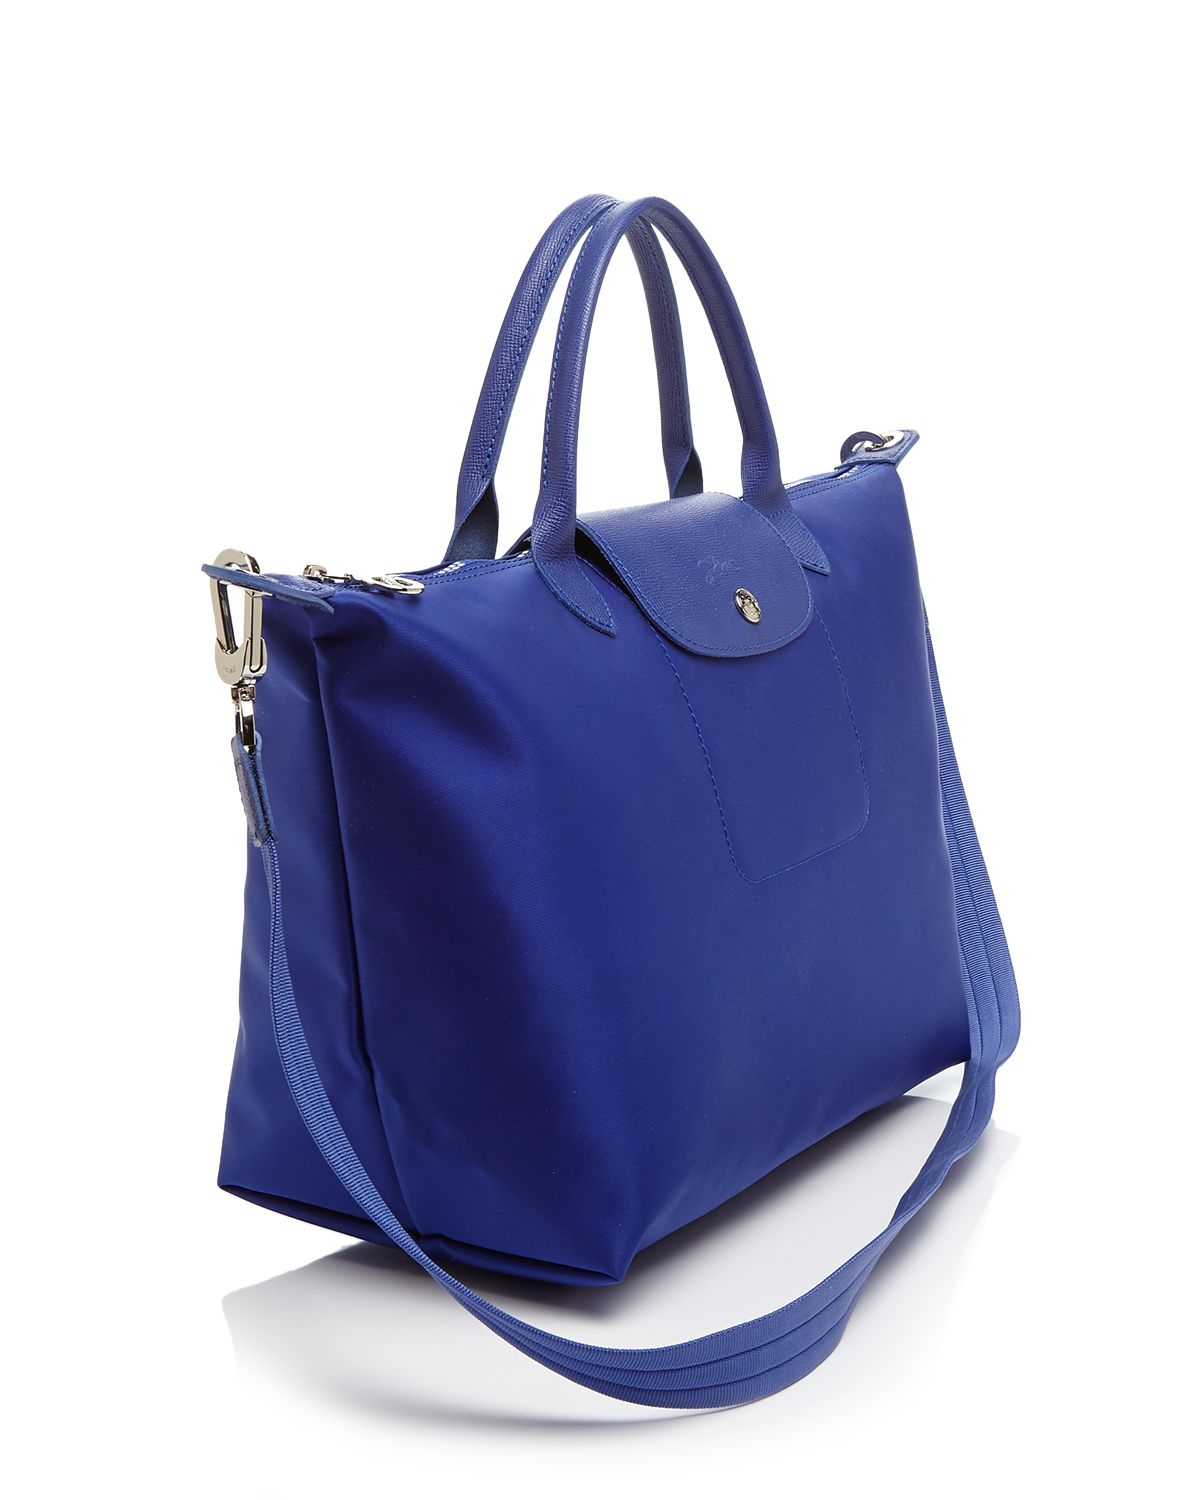 royal blue longchamp bag